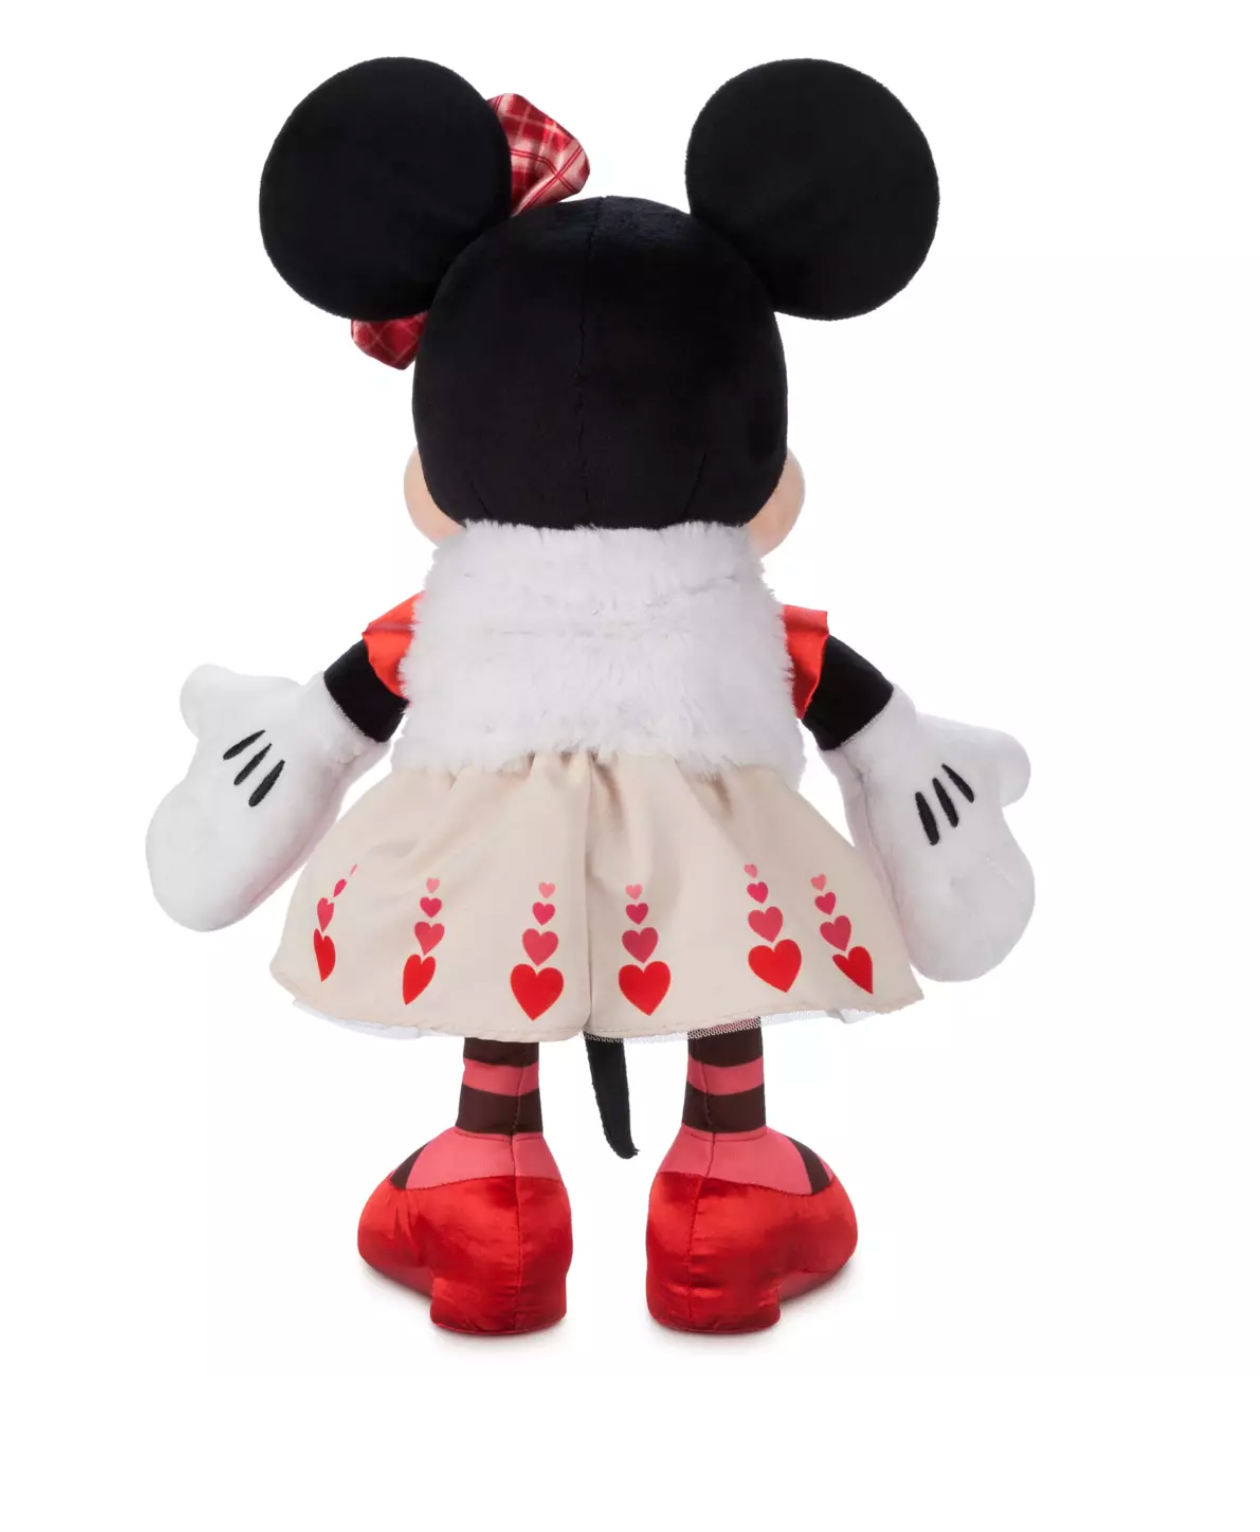 Disney Minnie with Hearts Valentine's Day 16inc Plush New with Tag